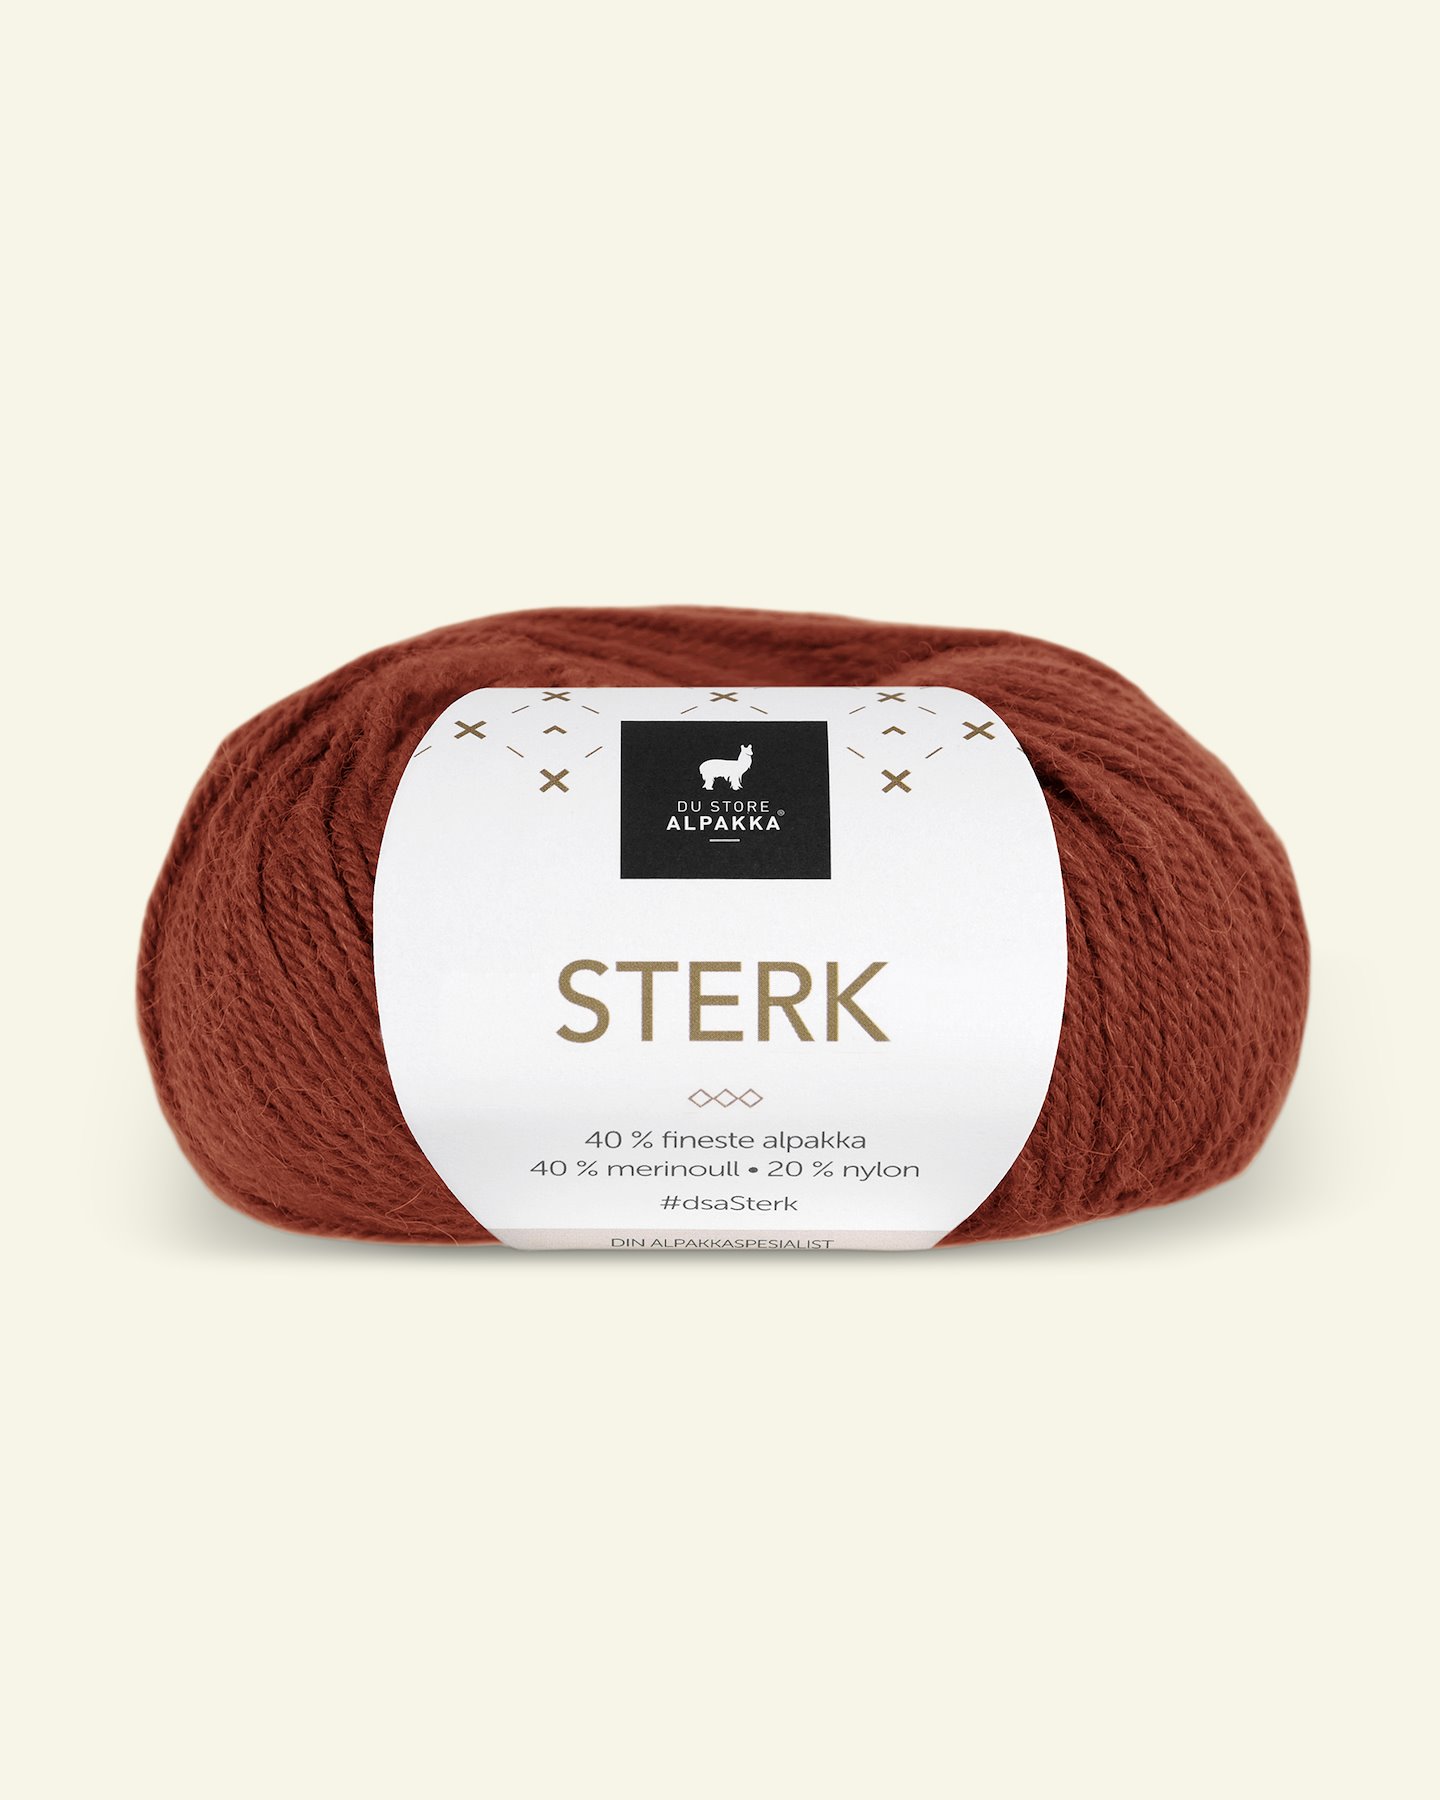 Du Store Alpakka, alpaca merino mixed yarn "Sterk", golden brown (862) 90000684_pack